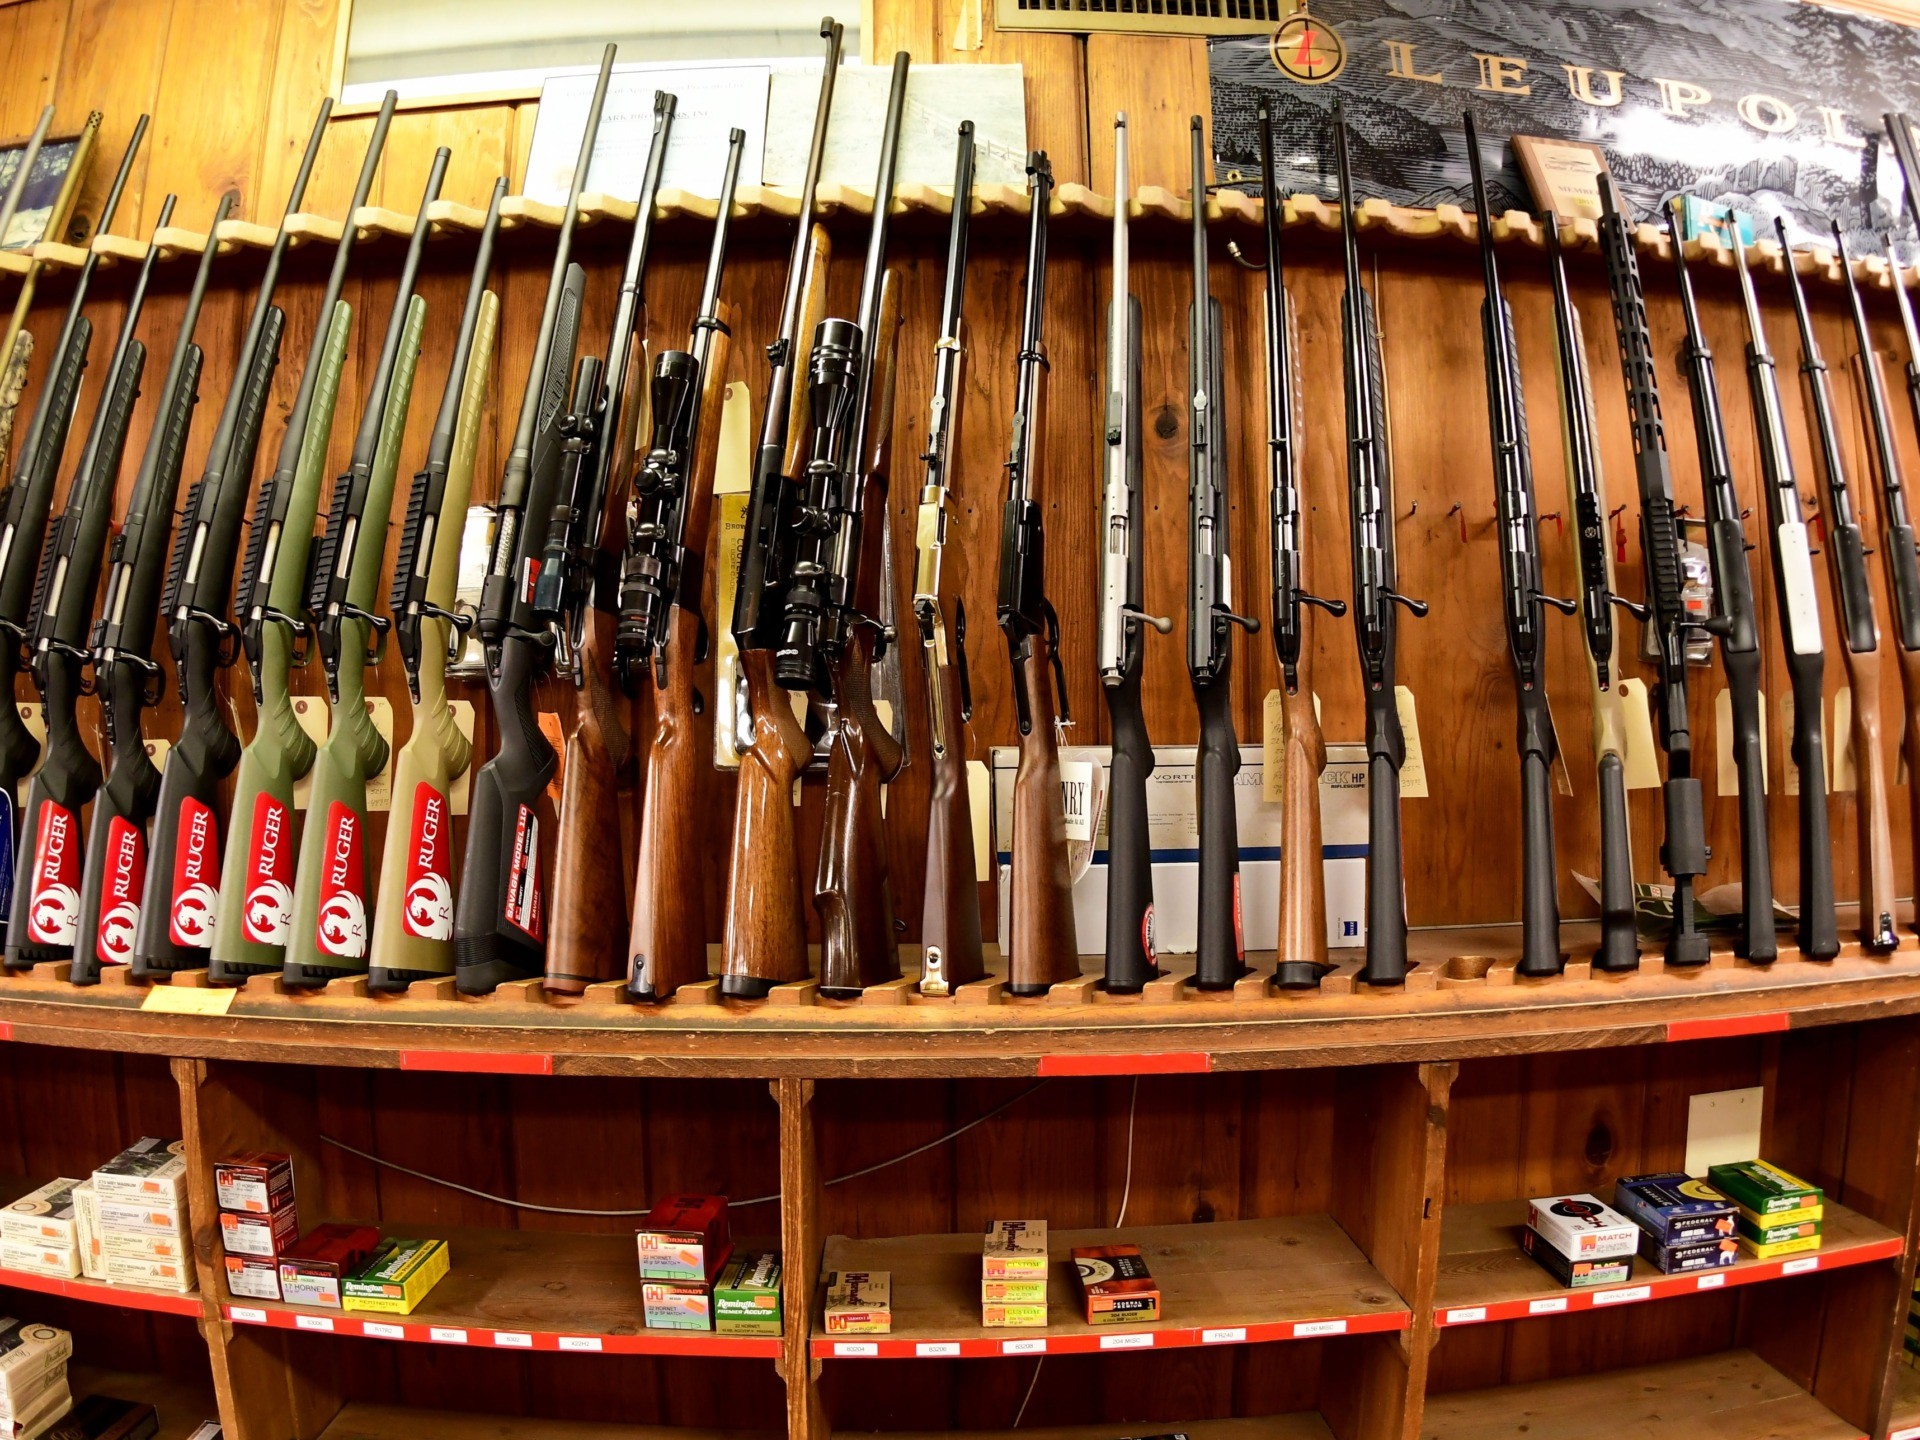 AZ Gun Store Owner: Biden Will Crush Our Business, Erase Our Freedom